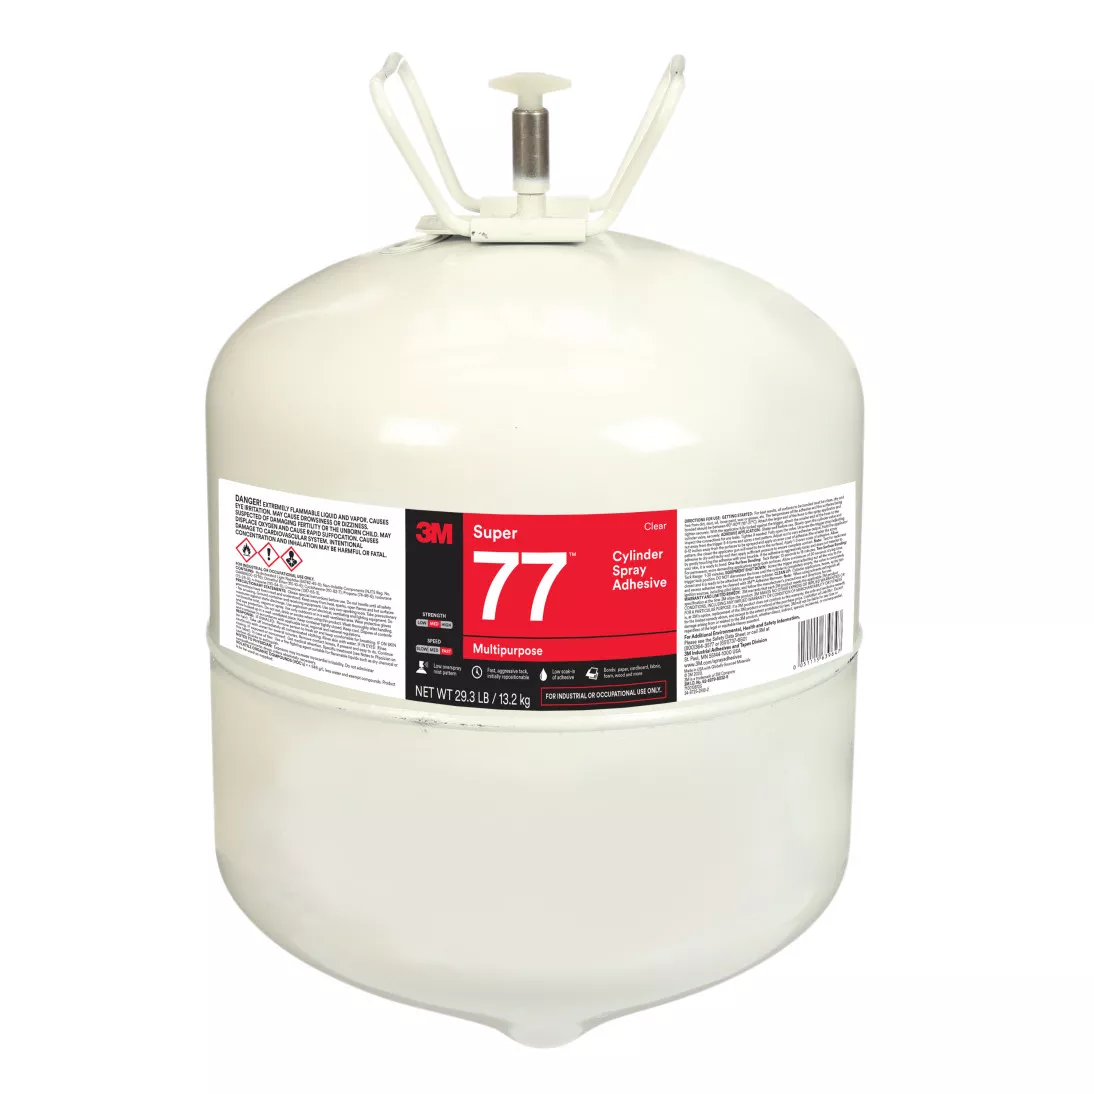 3M™ Super 77™ Multipurpose Cylinder Spray Adhesive, Clear, Large
Cylinder (Net Wt 29.3 lb), 1/case